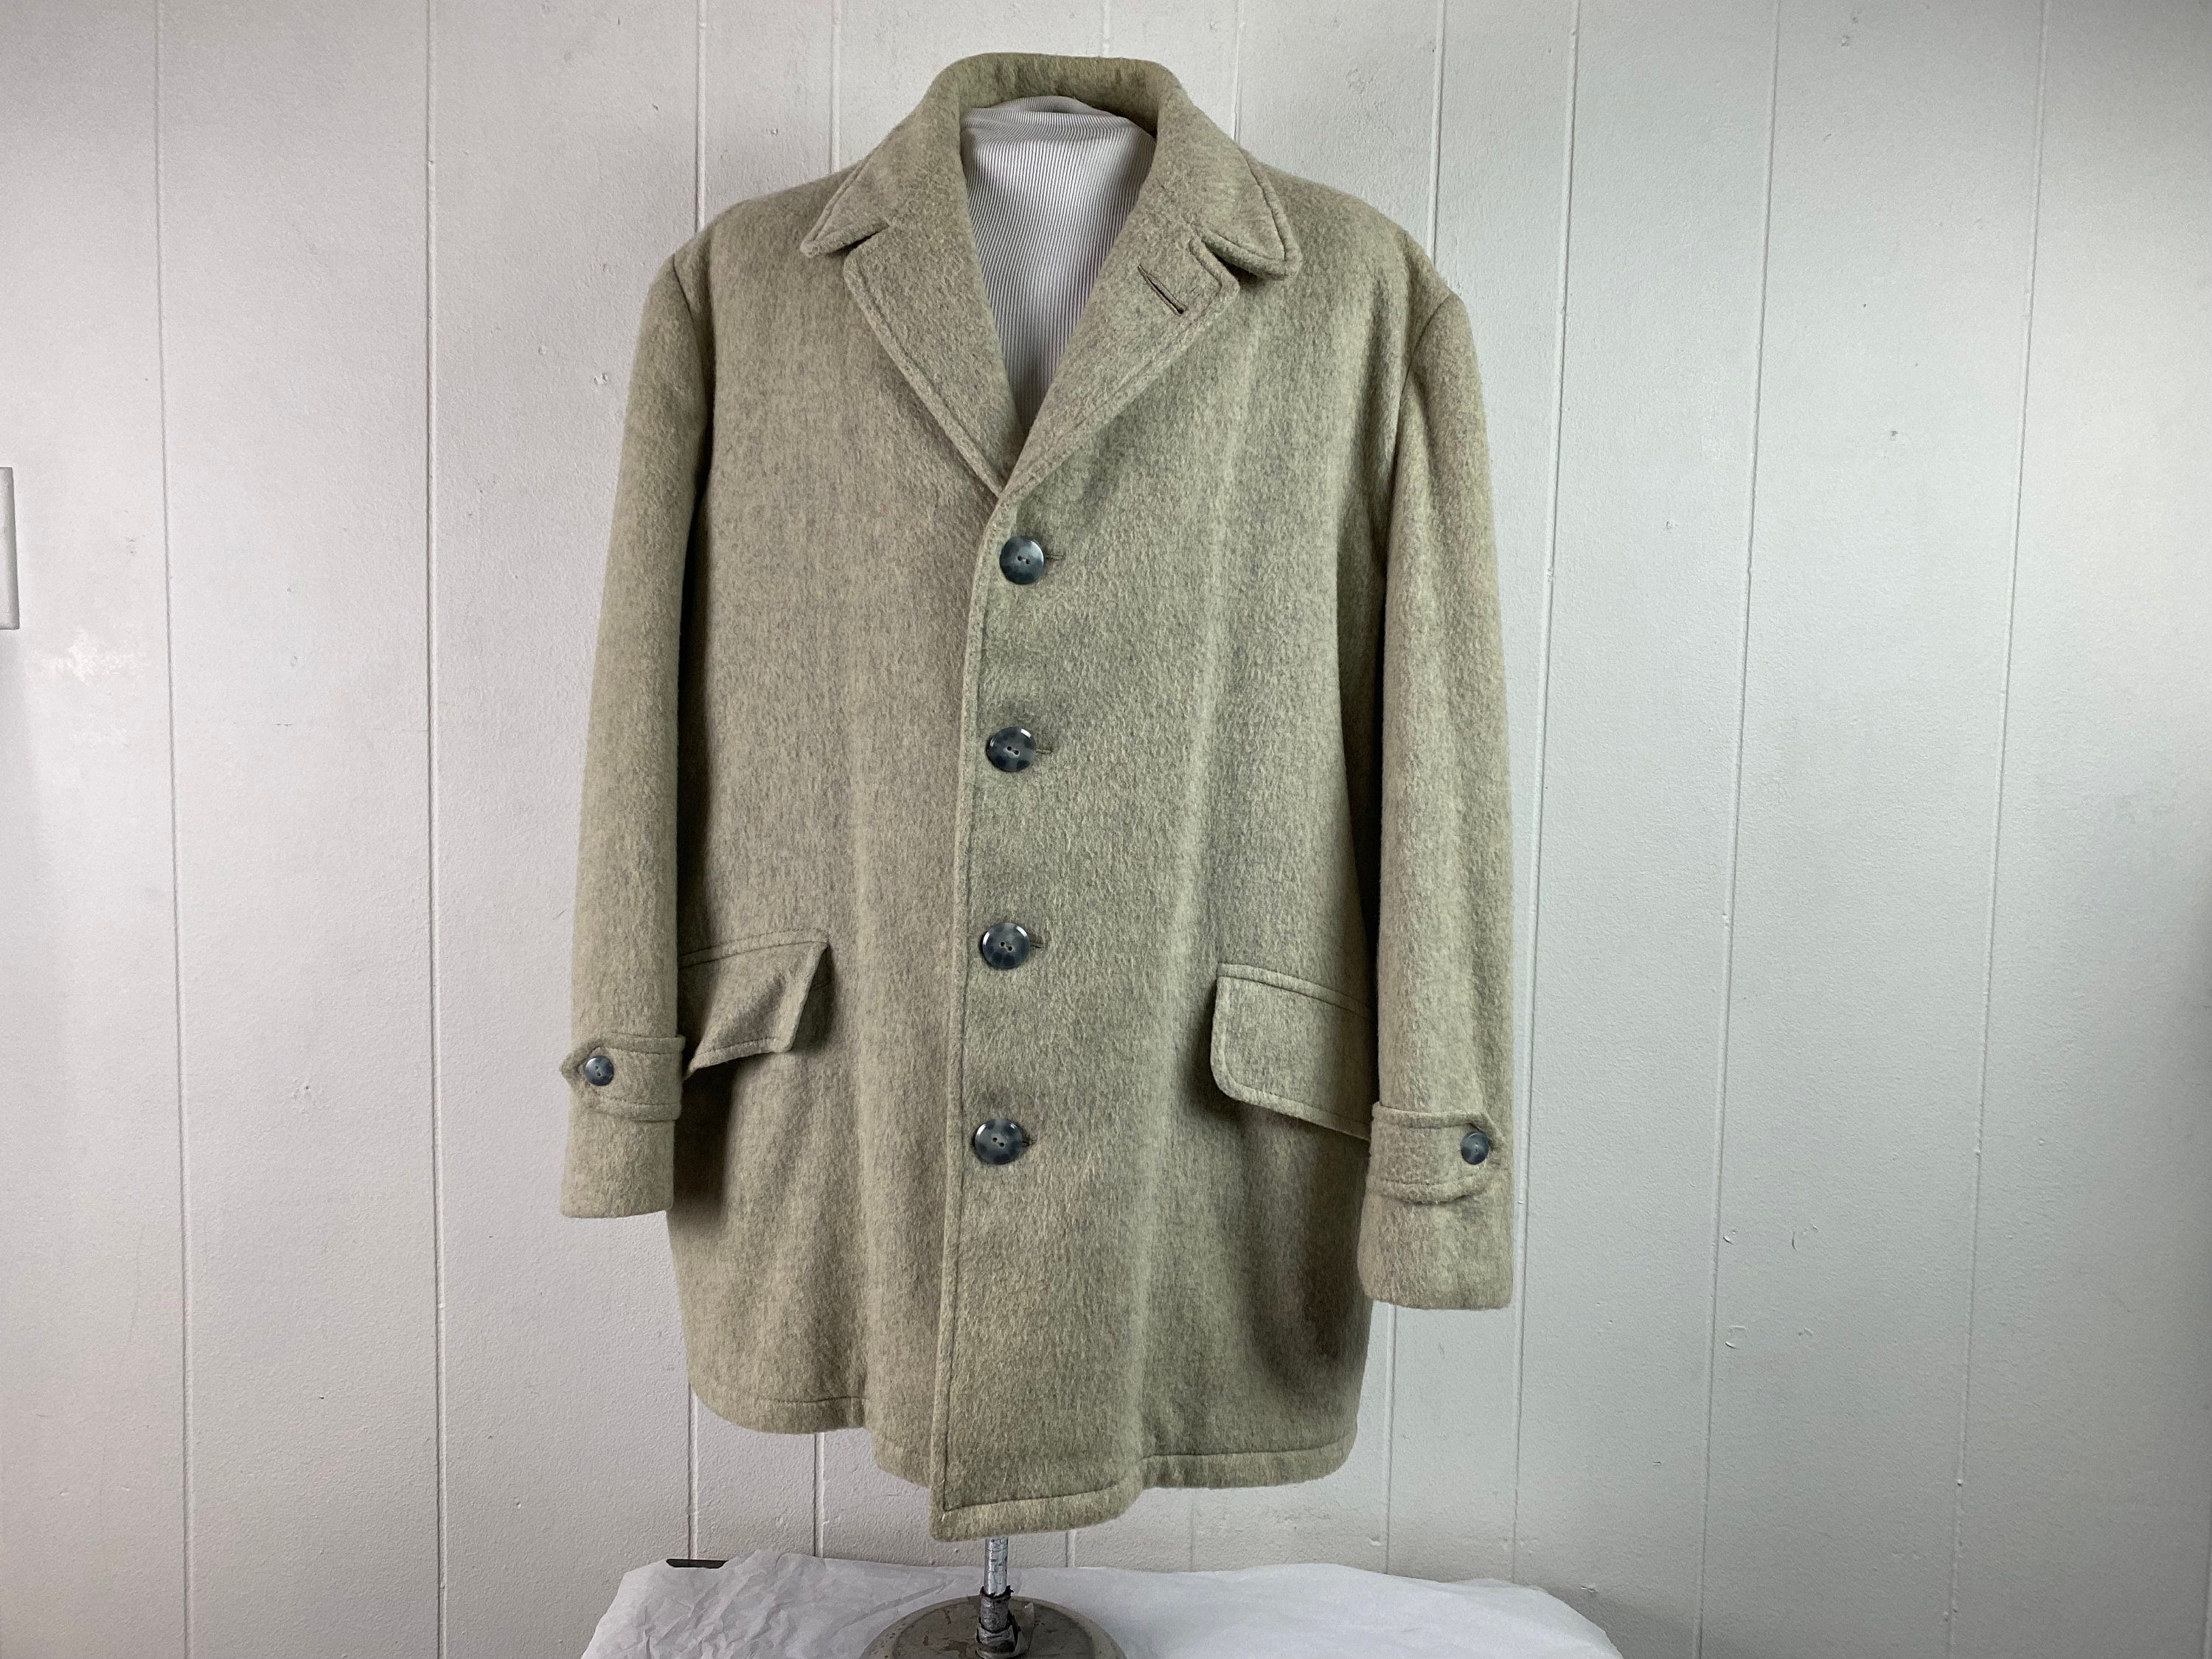 Vintage Coat 1950s Coat Rockabilly Jacket Car Coat Sir - Etsy